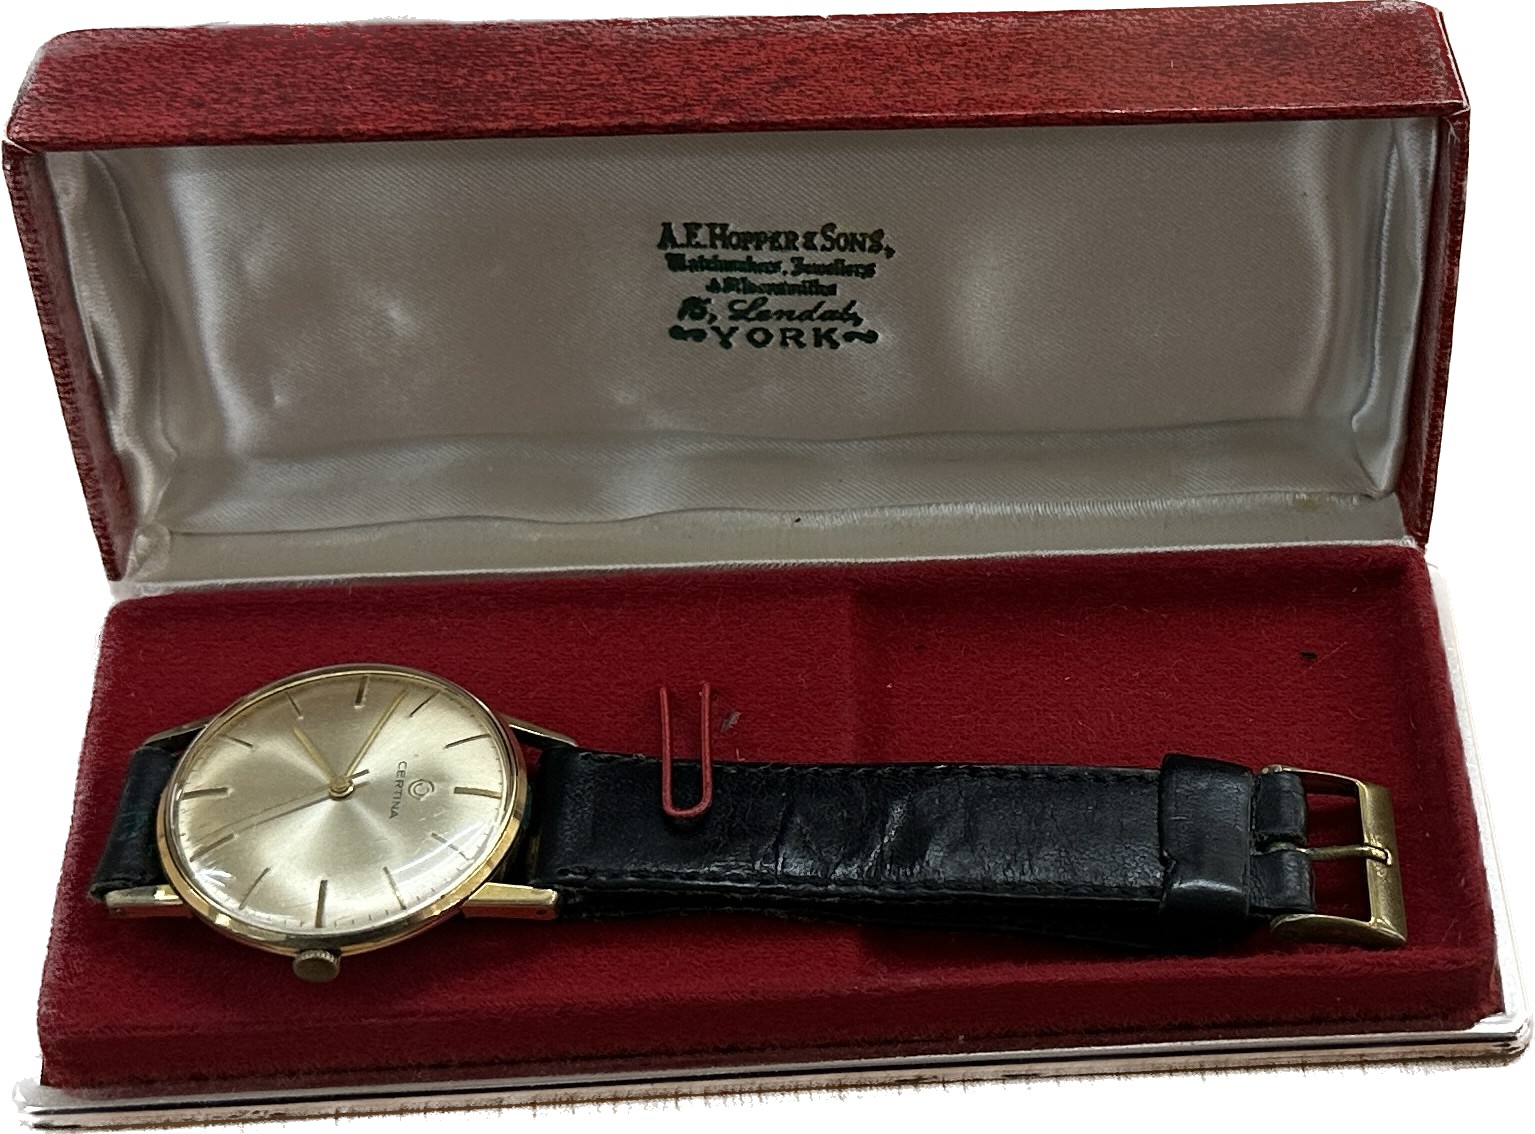 Original boxed Certina watch in working order